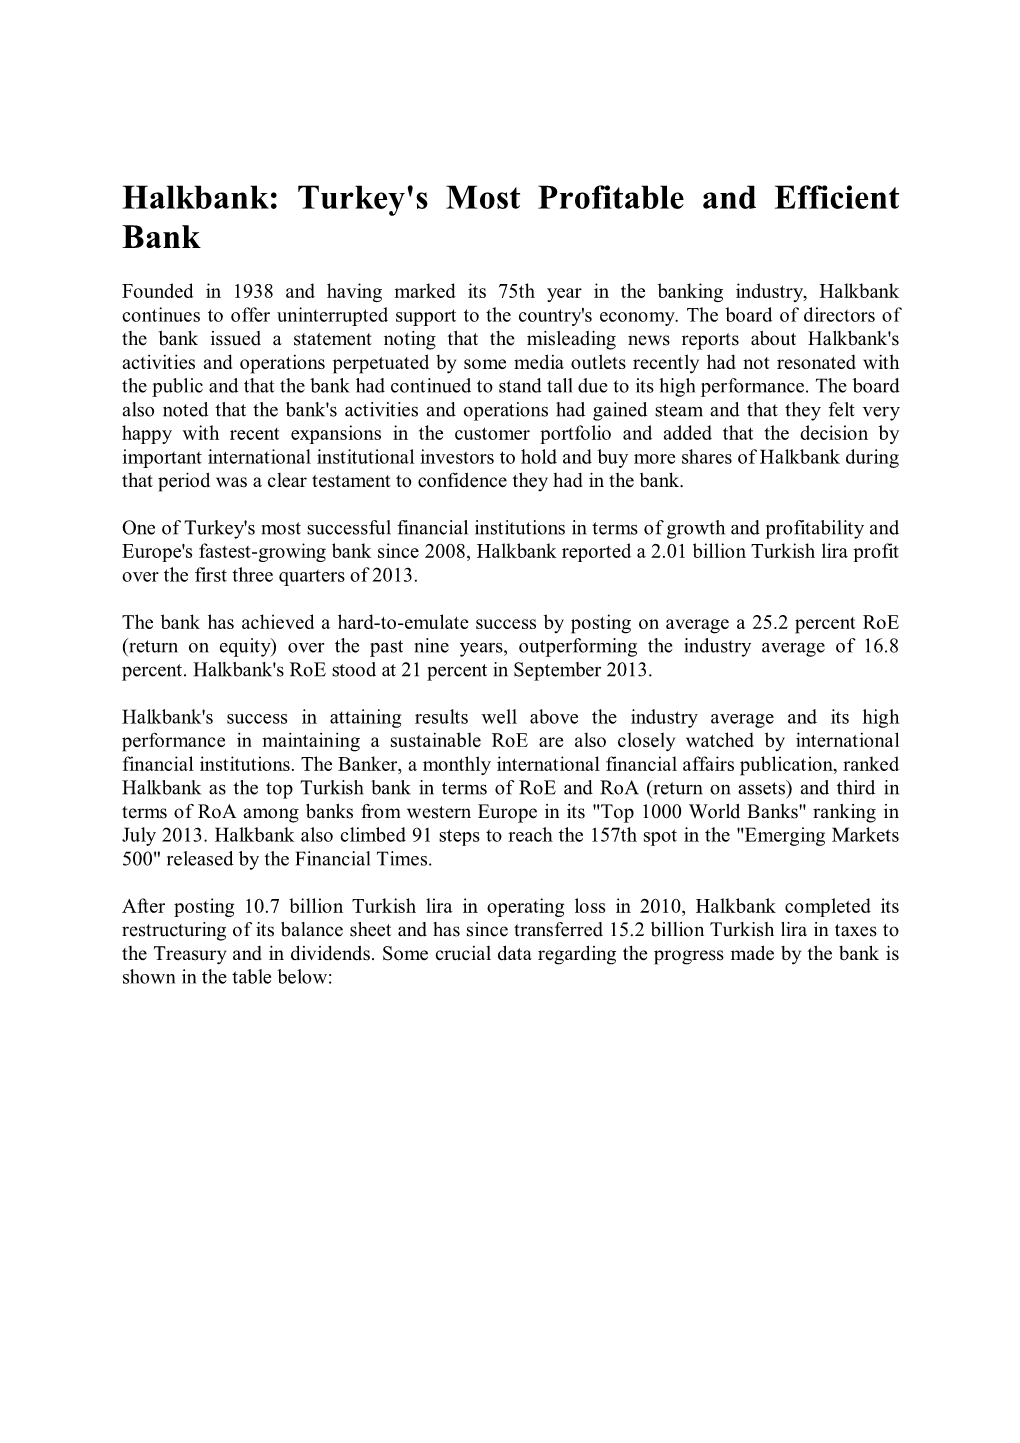 Halkbank: Turkey's Most Profitable and Efficient Bank